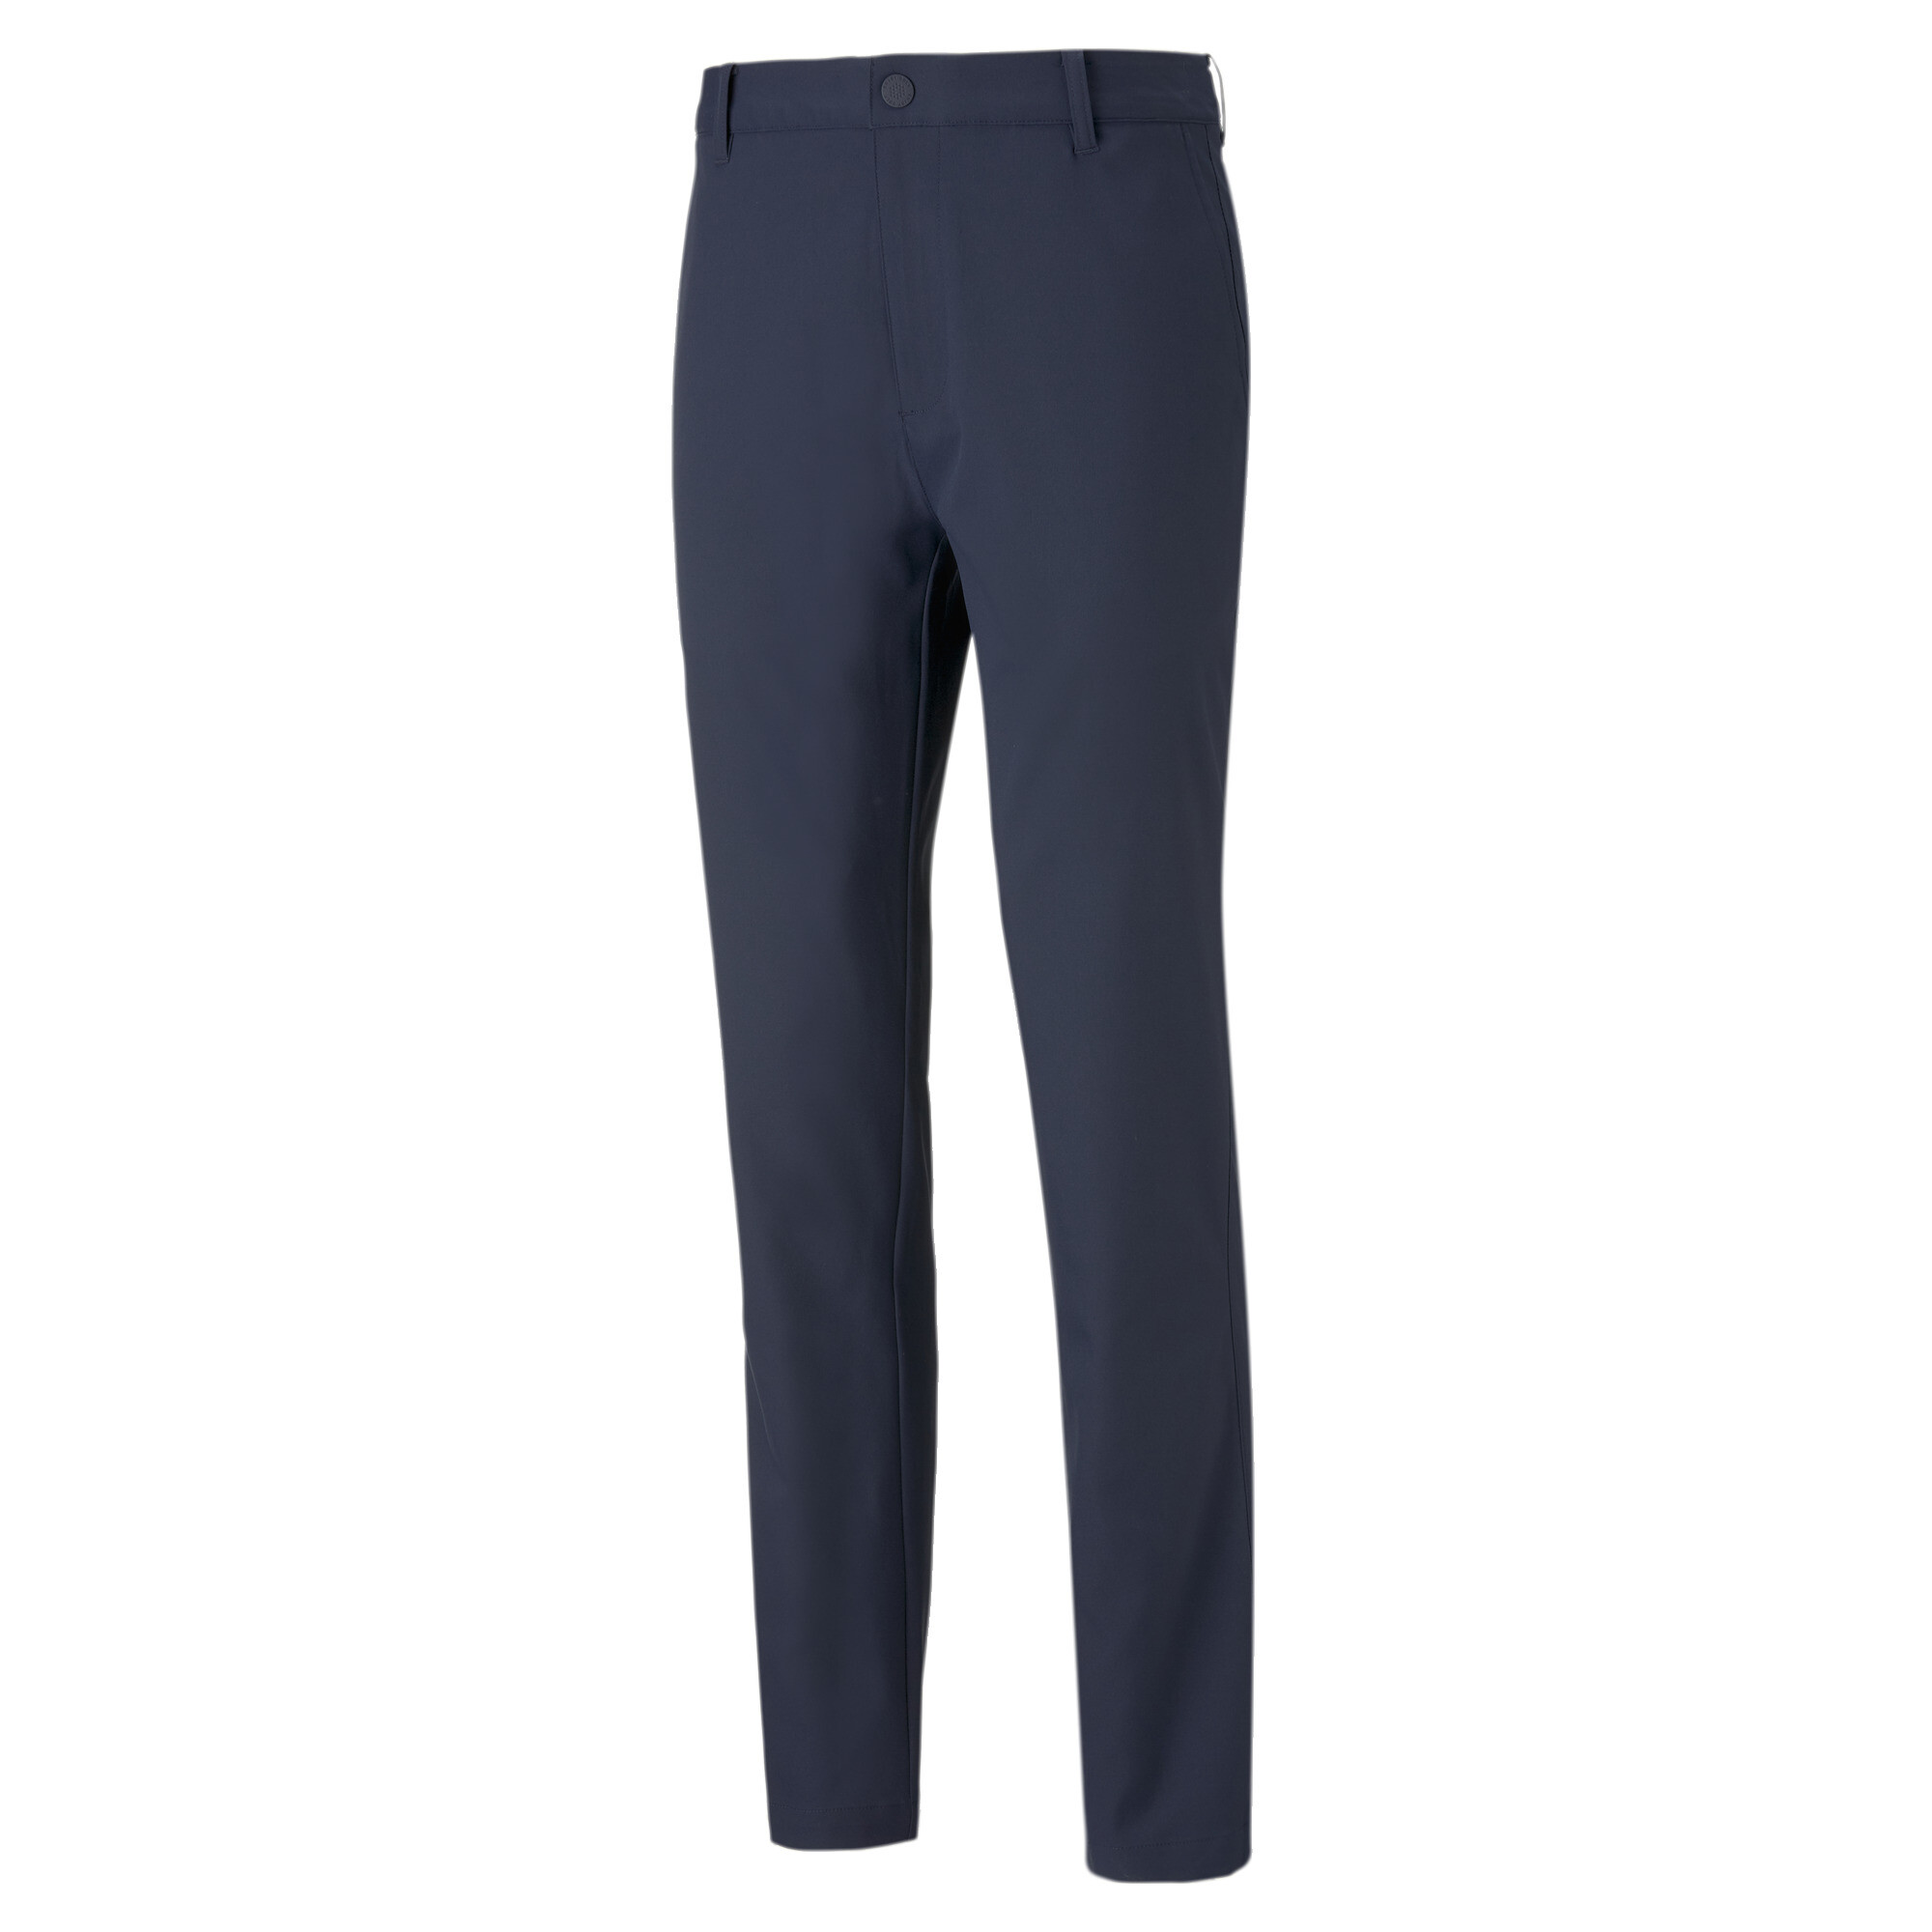 Men's Puma Dealer Golf Pants, Blue, Size 30/34, Clothing